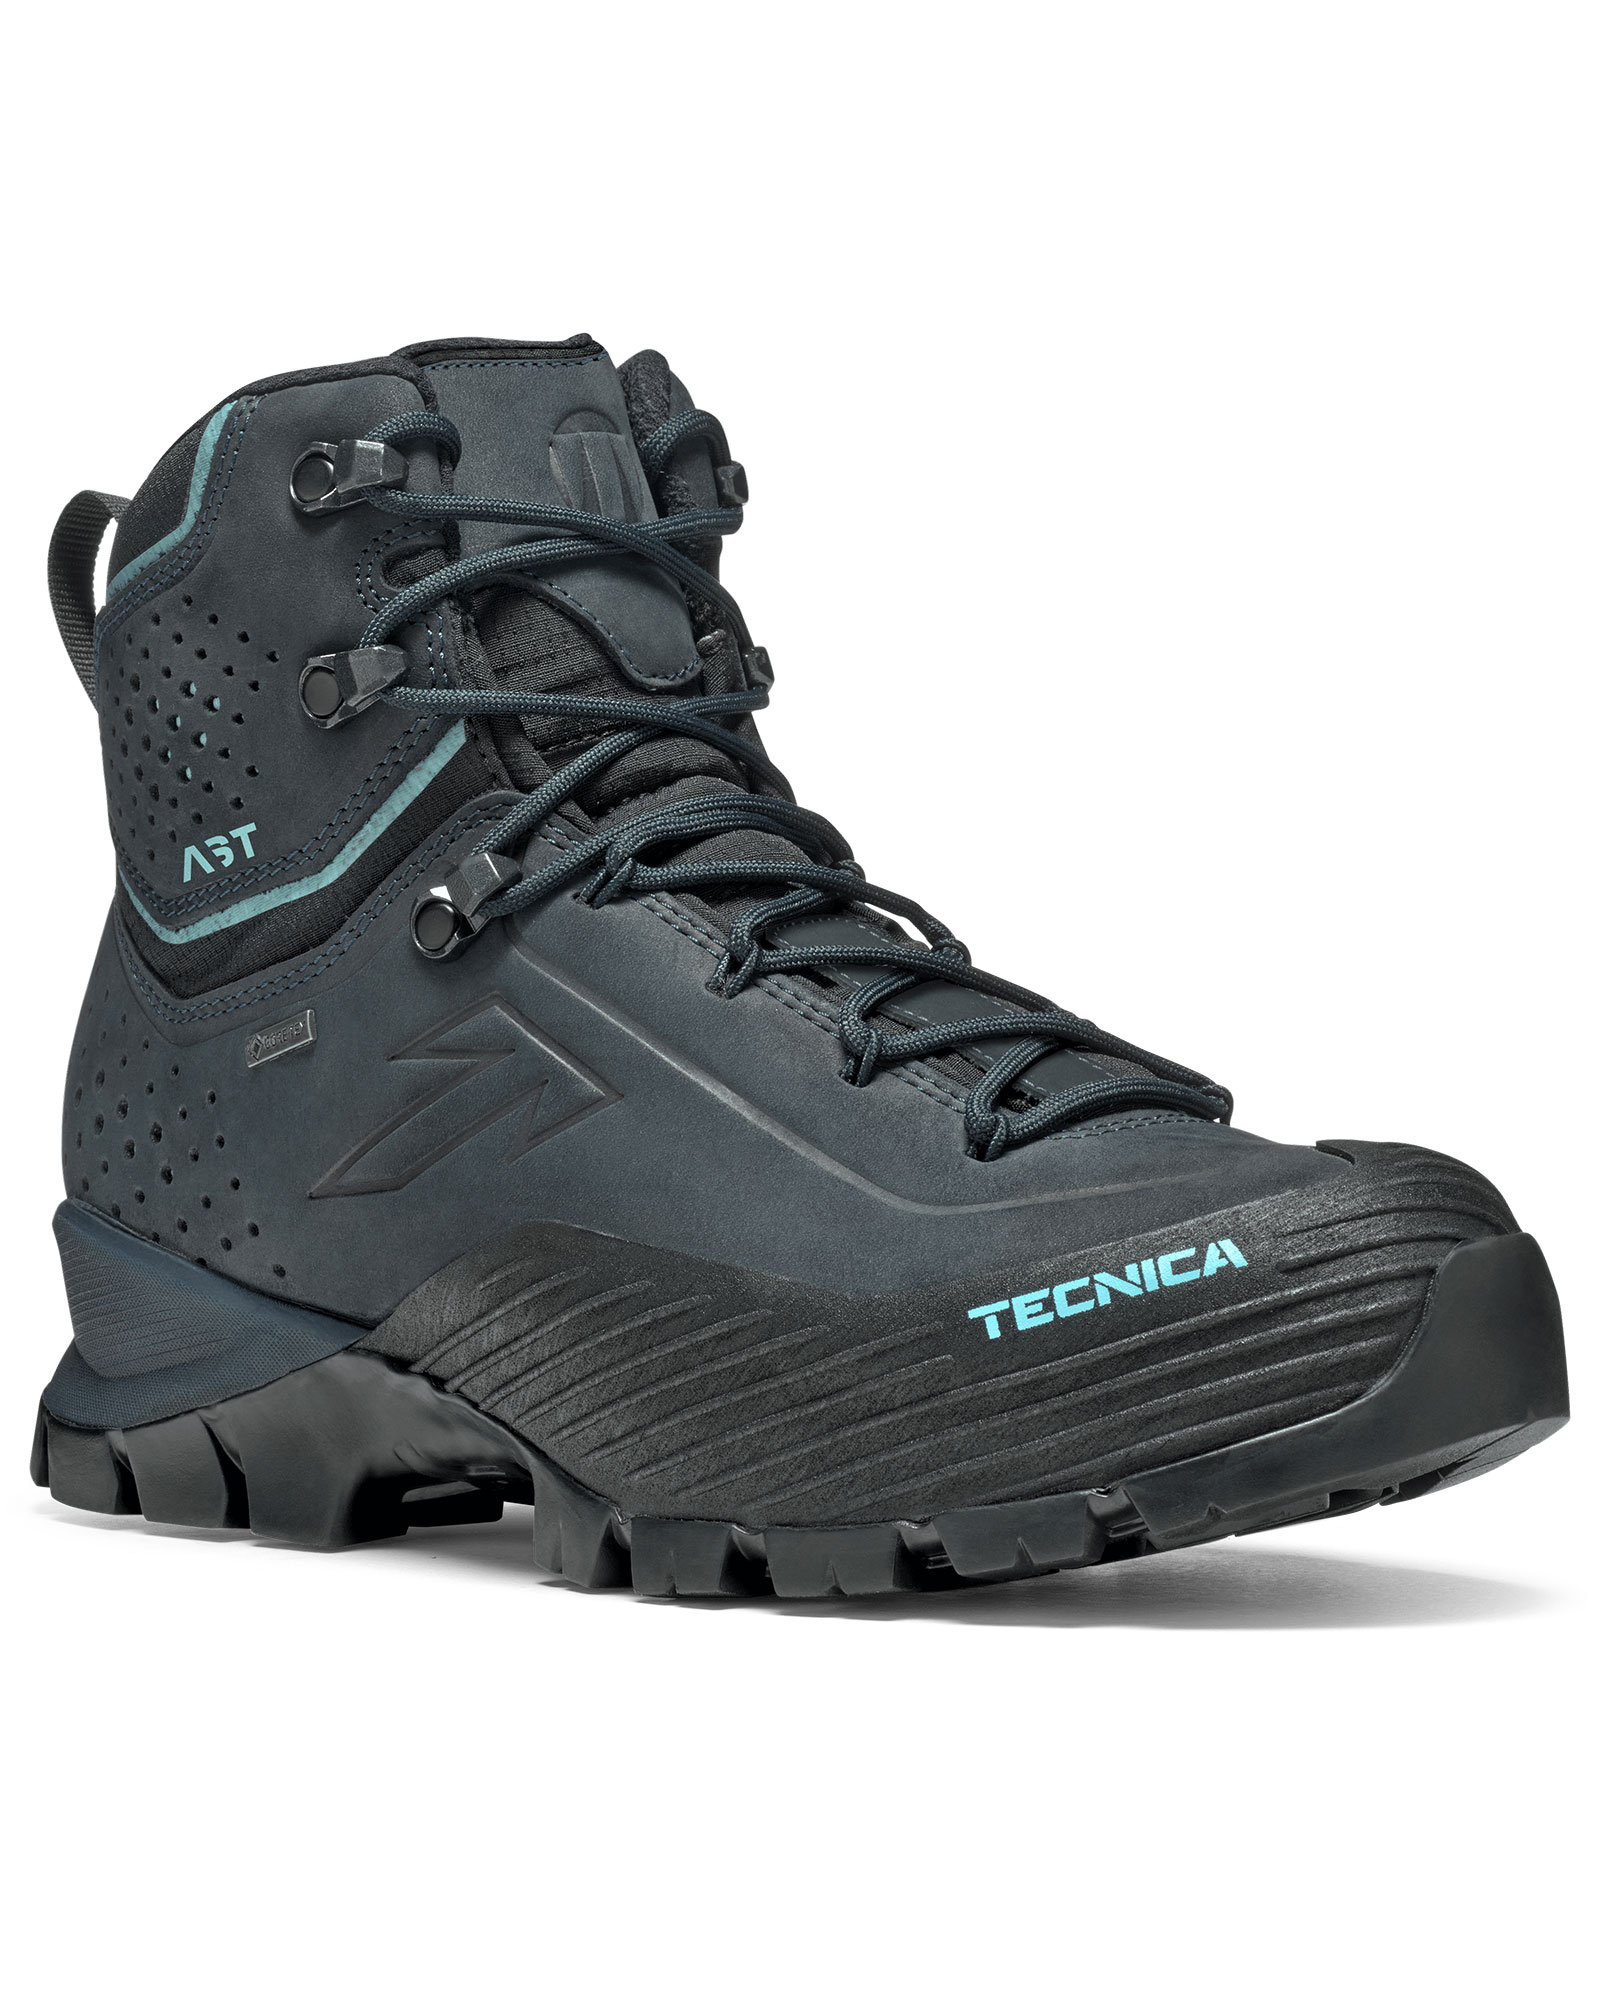 Tecnica Forge 2.0 GORE TEX Women’s Boots - Dark Avio/Light Blueness UK 4